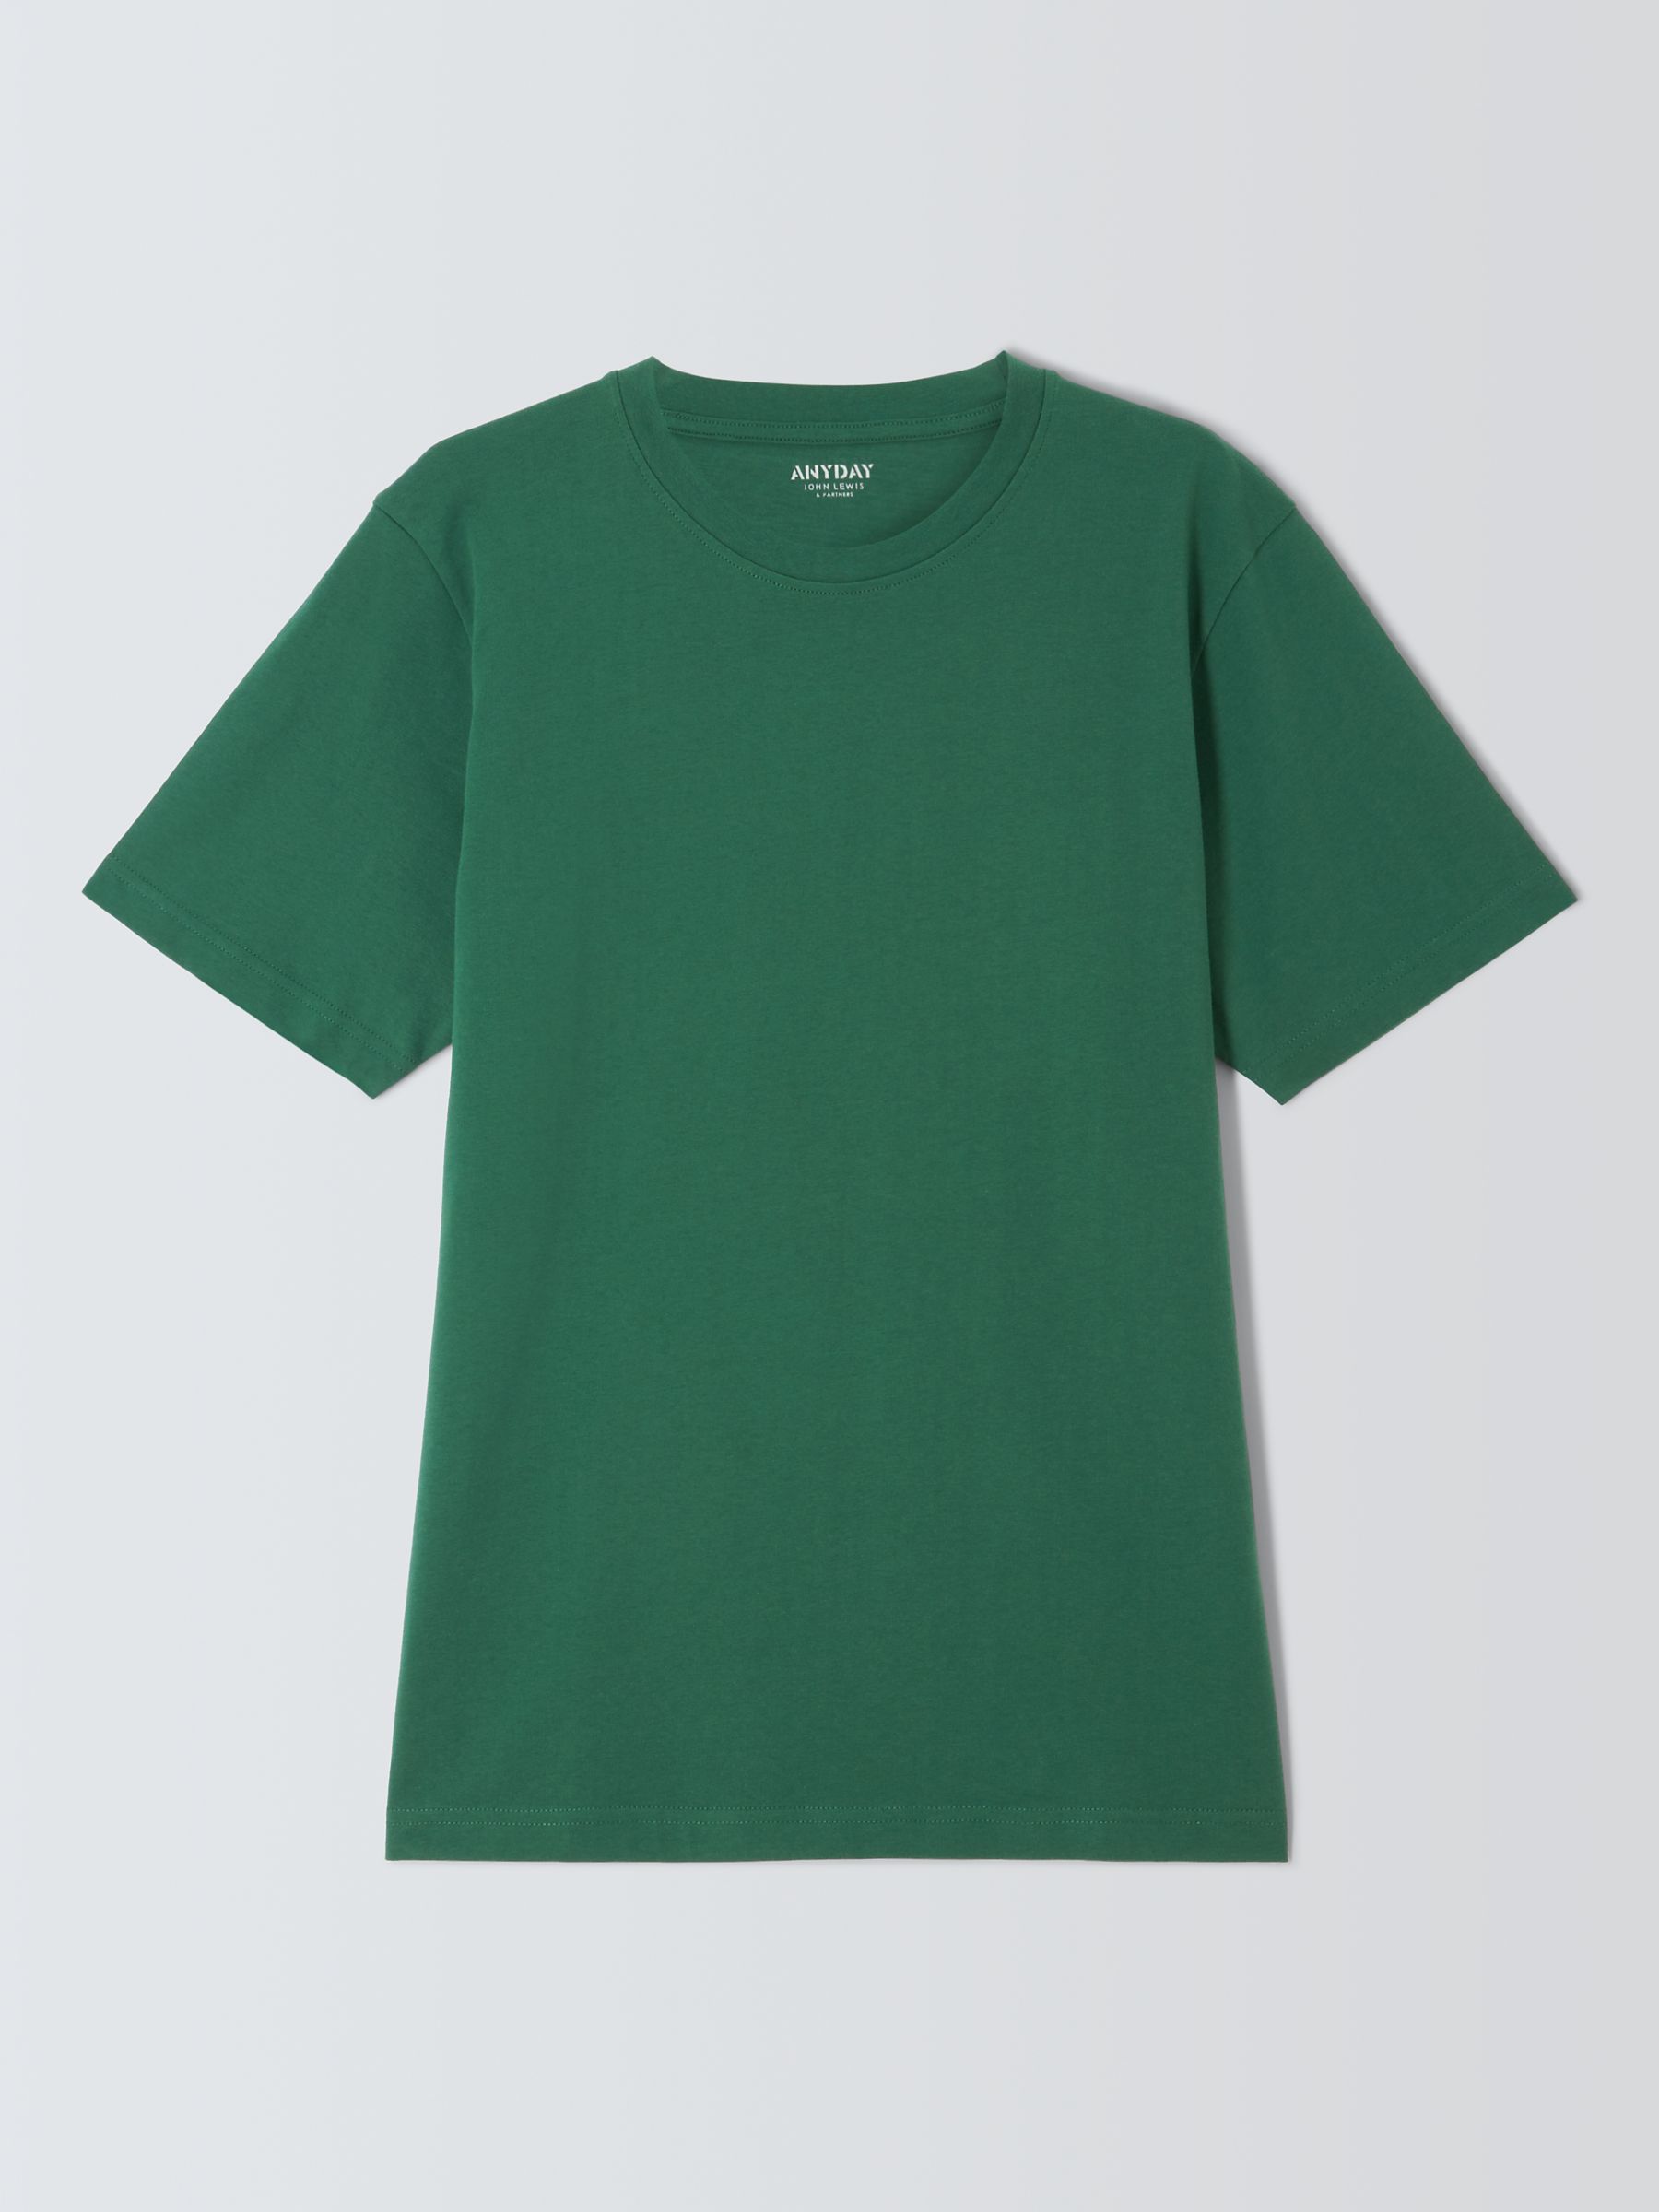 John Lewis ANYDAY Short Sleeve Plain T-Shirt, Hunter Green, S